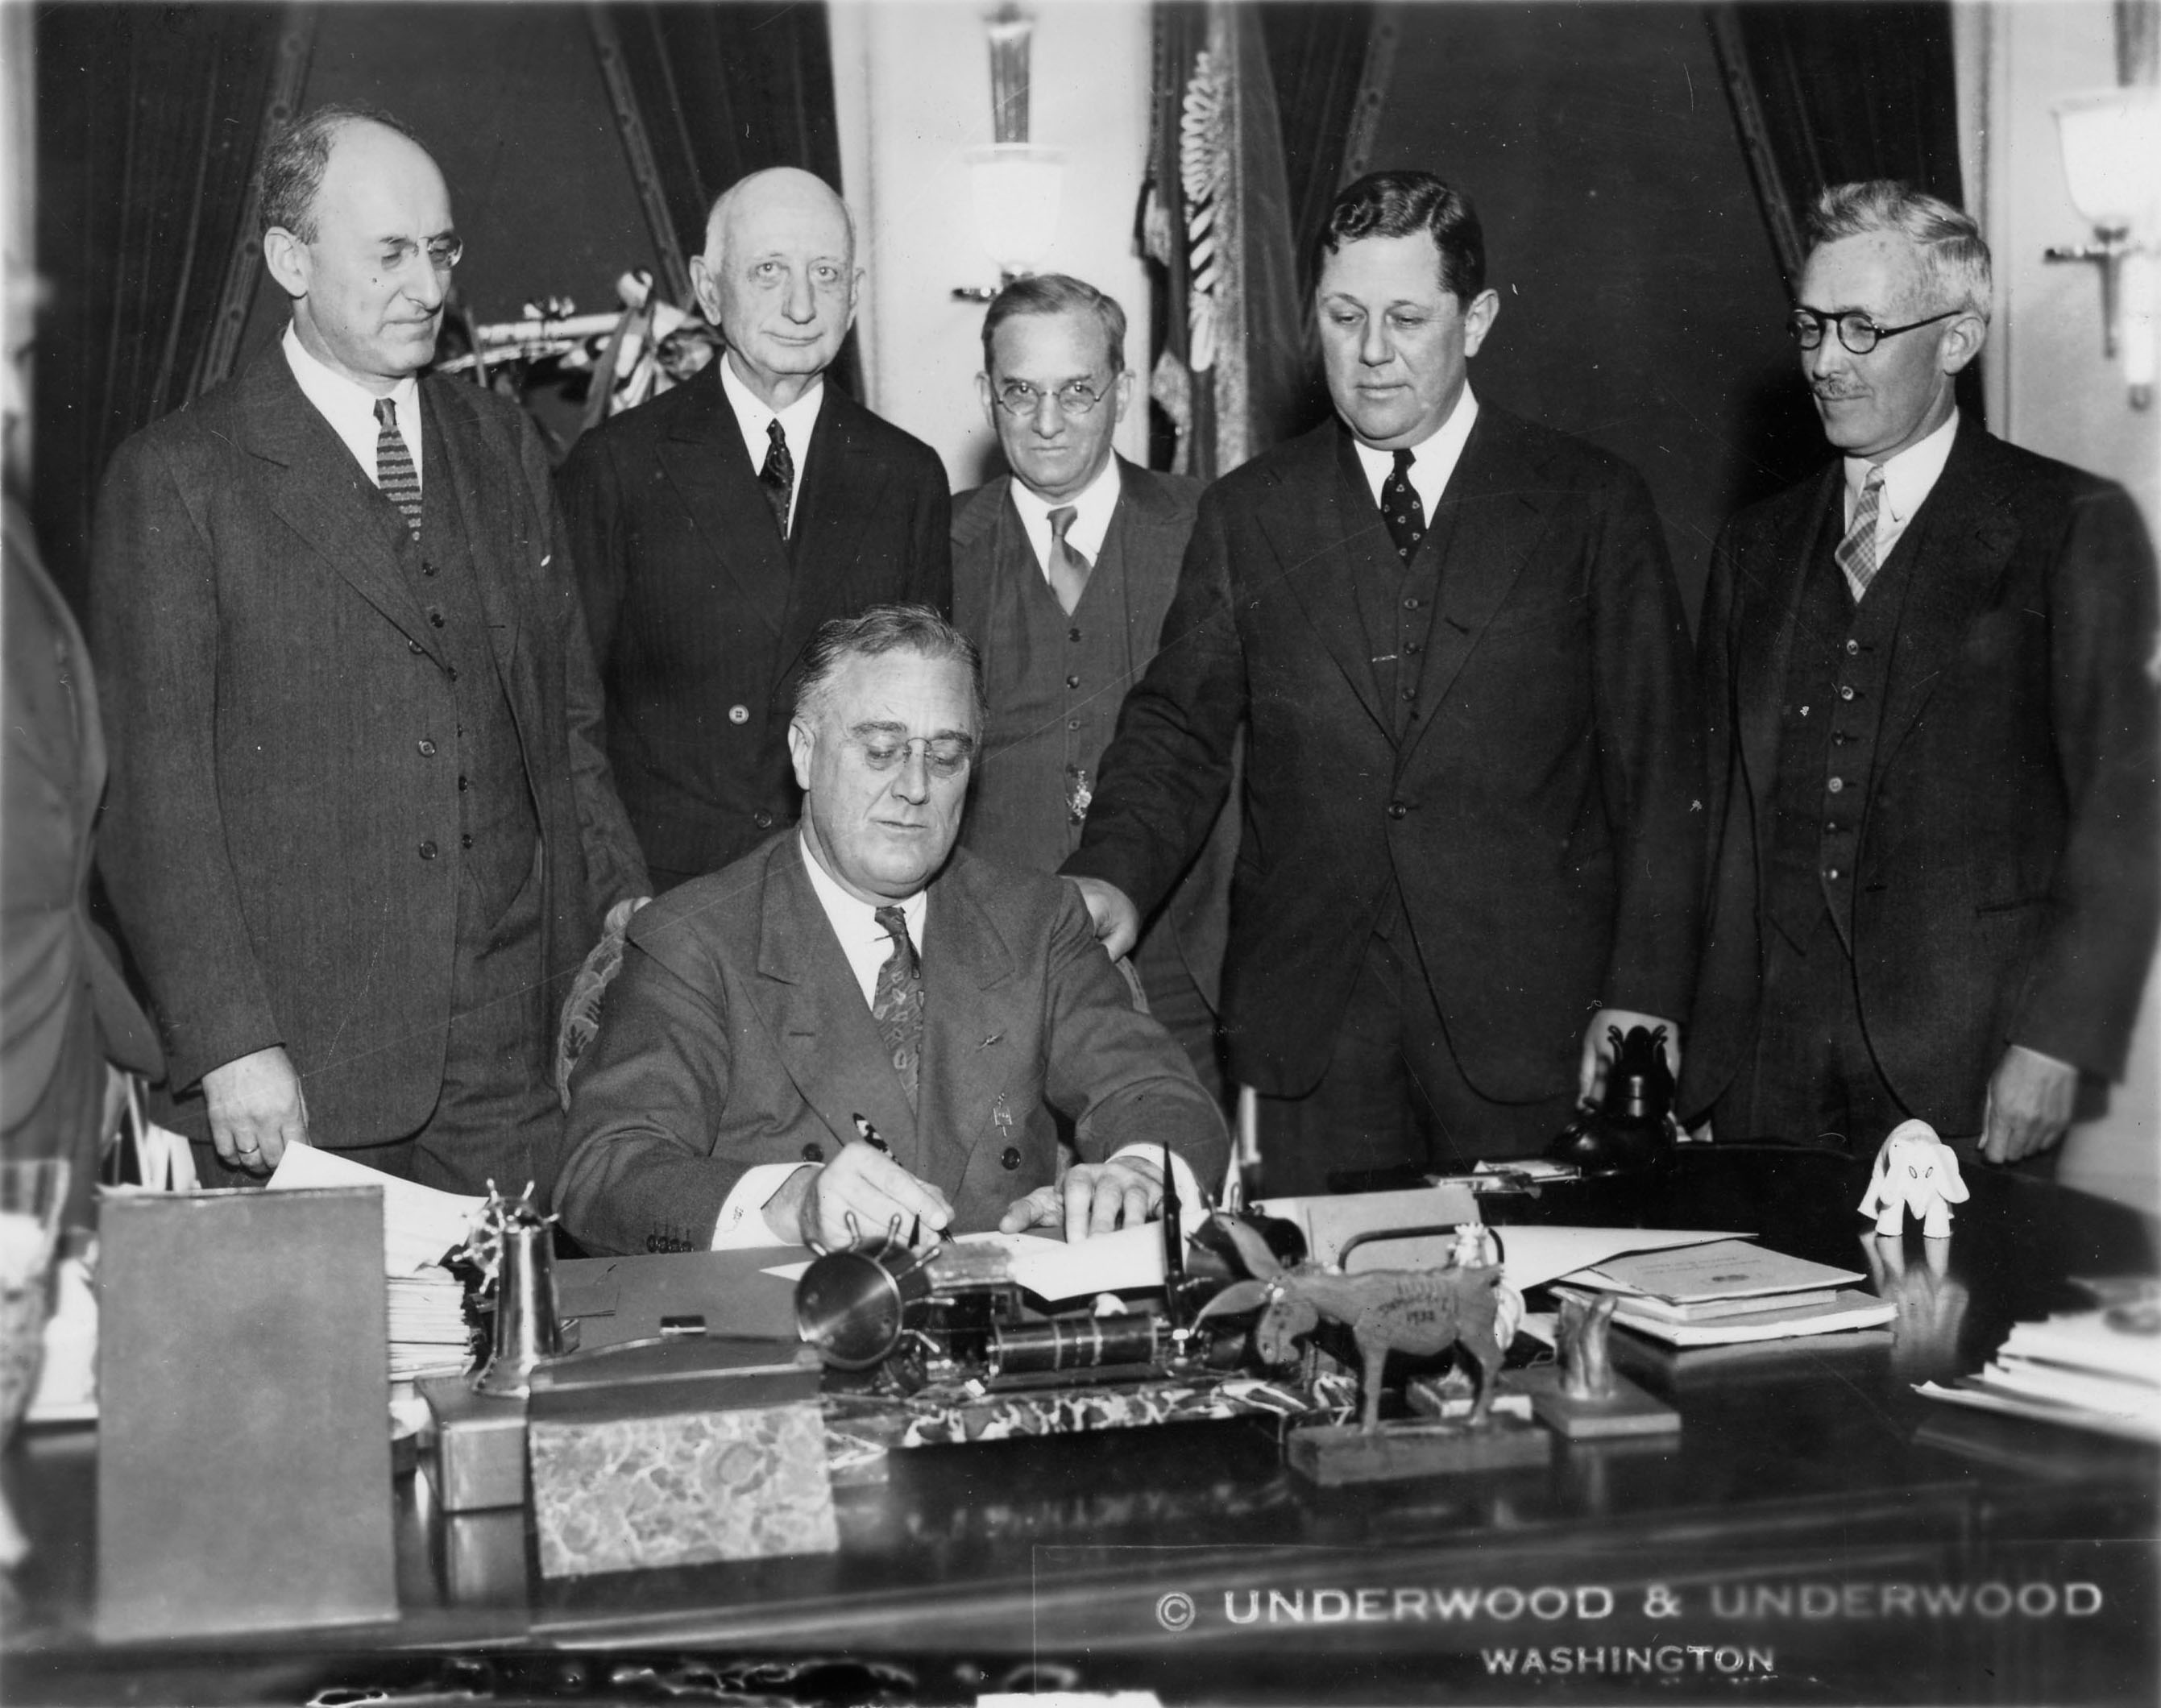 Roosevelt new deal image Federal Reserve Public Domain